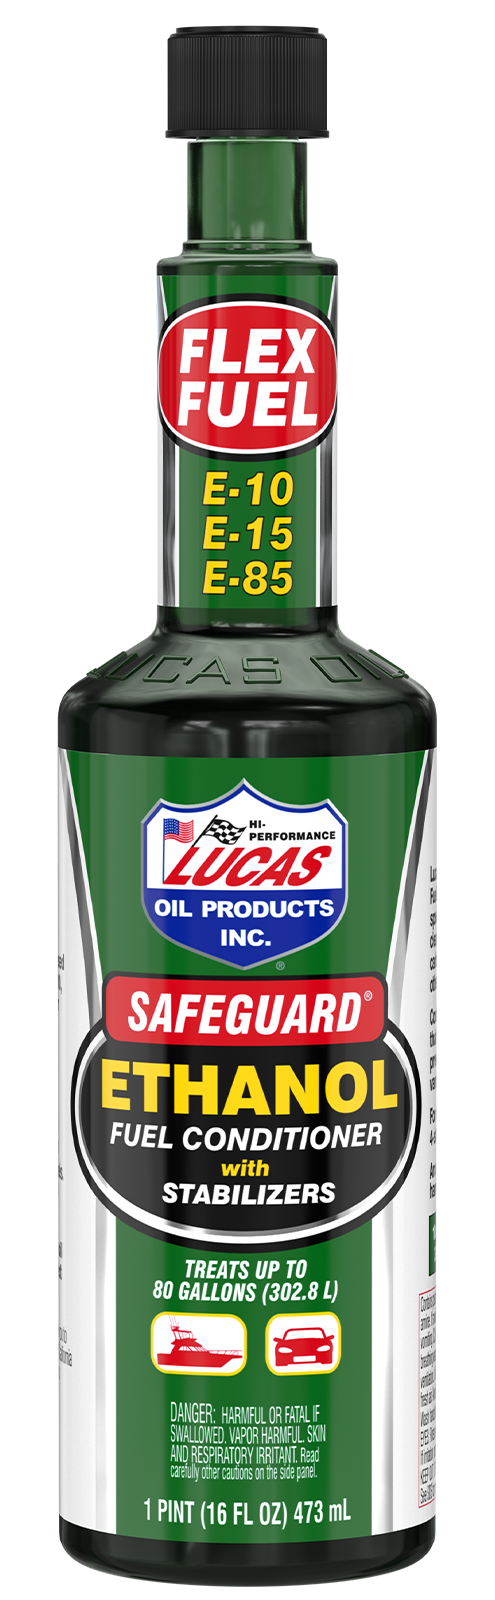 Lucas Safeguard Ethanol Fuel Conditioner